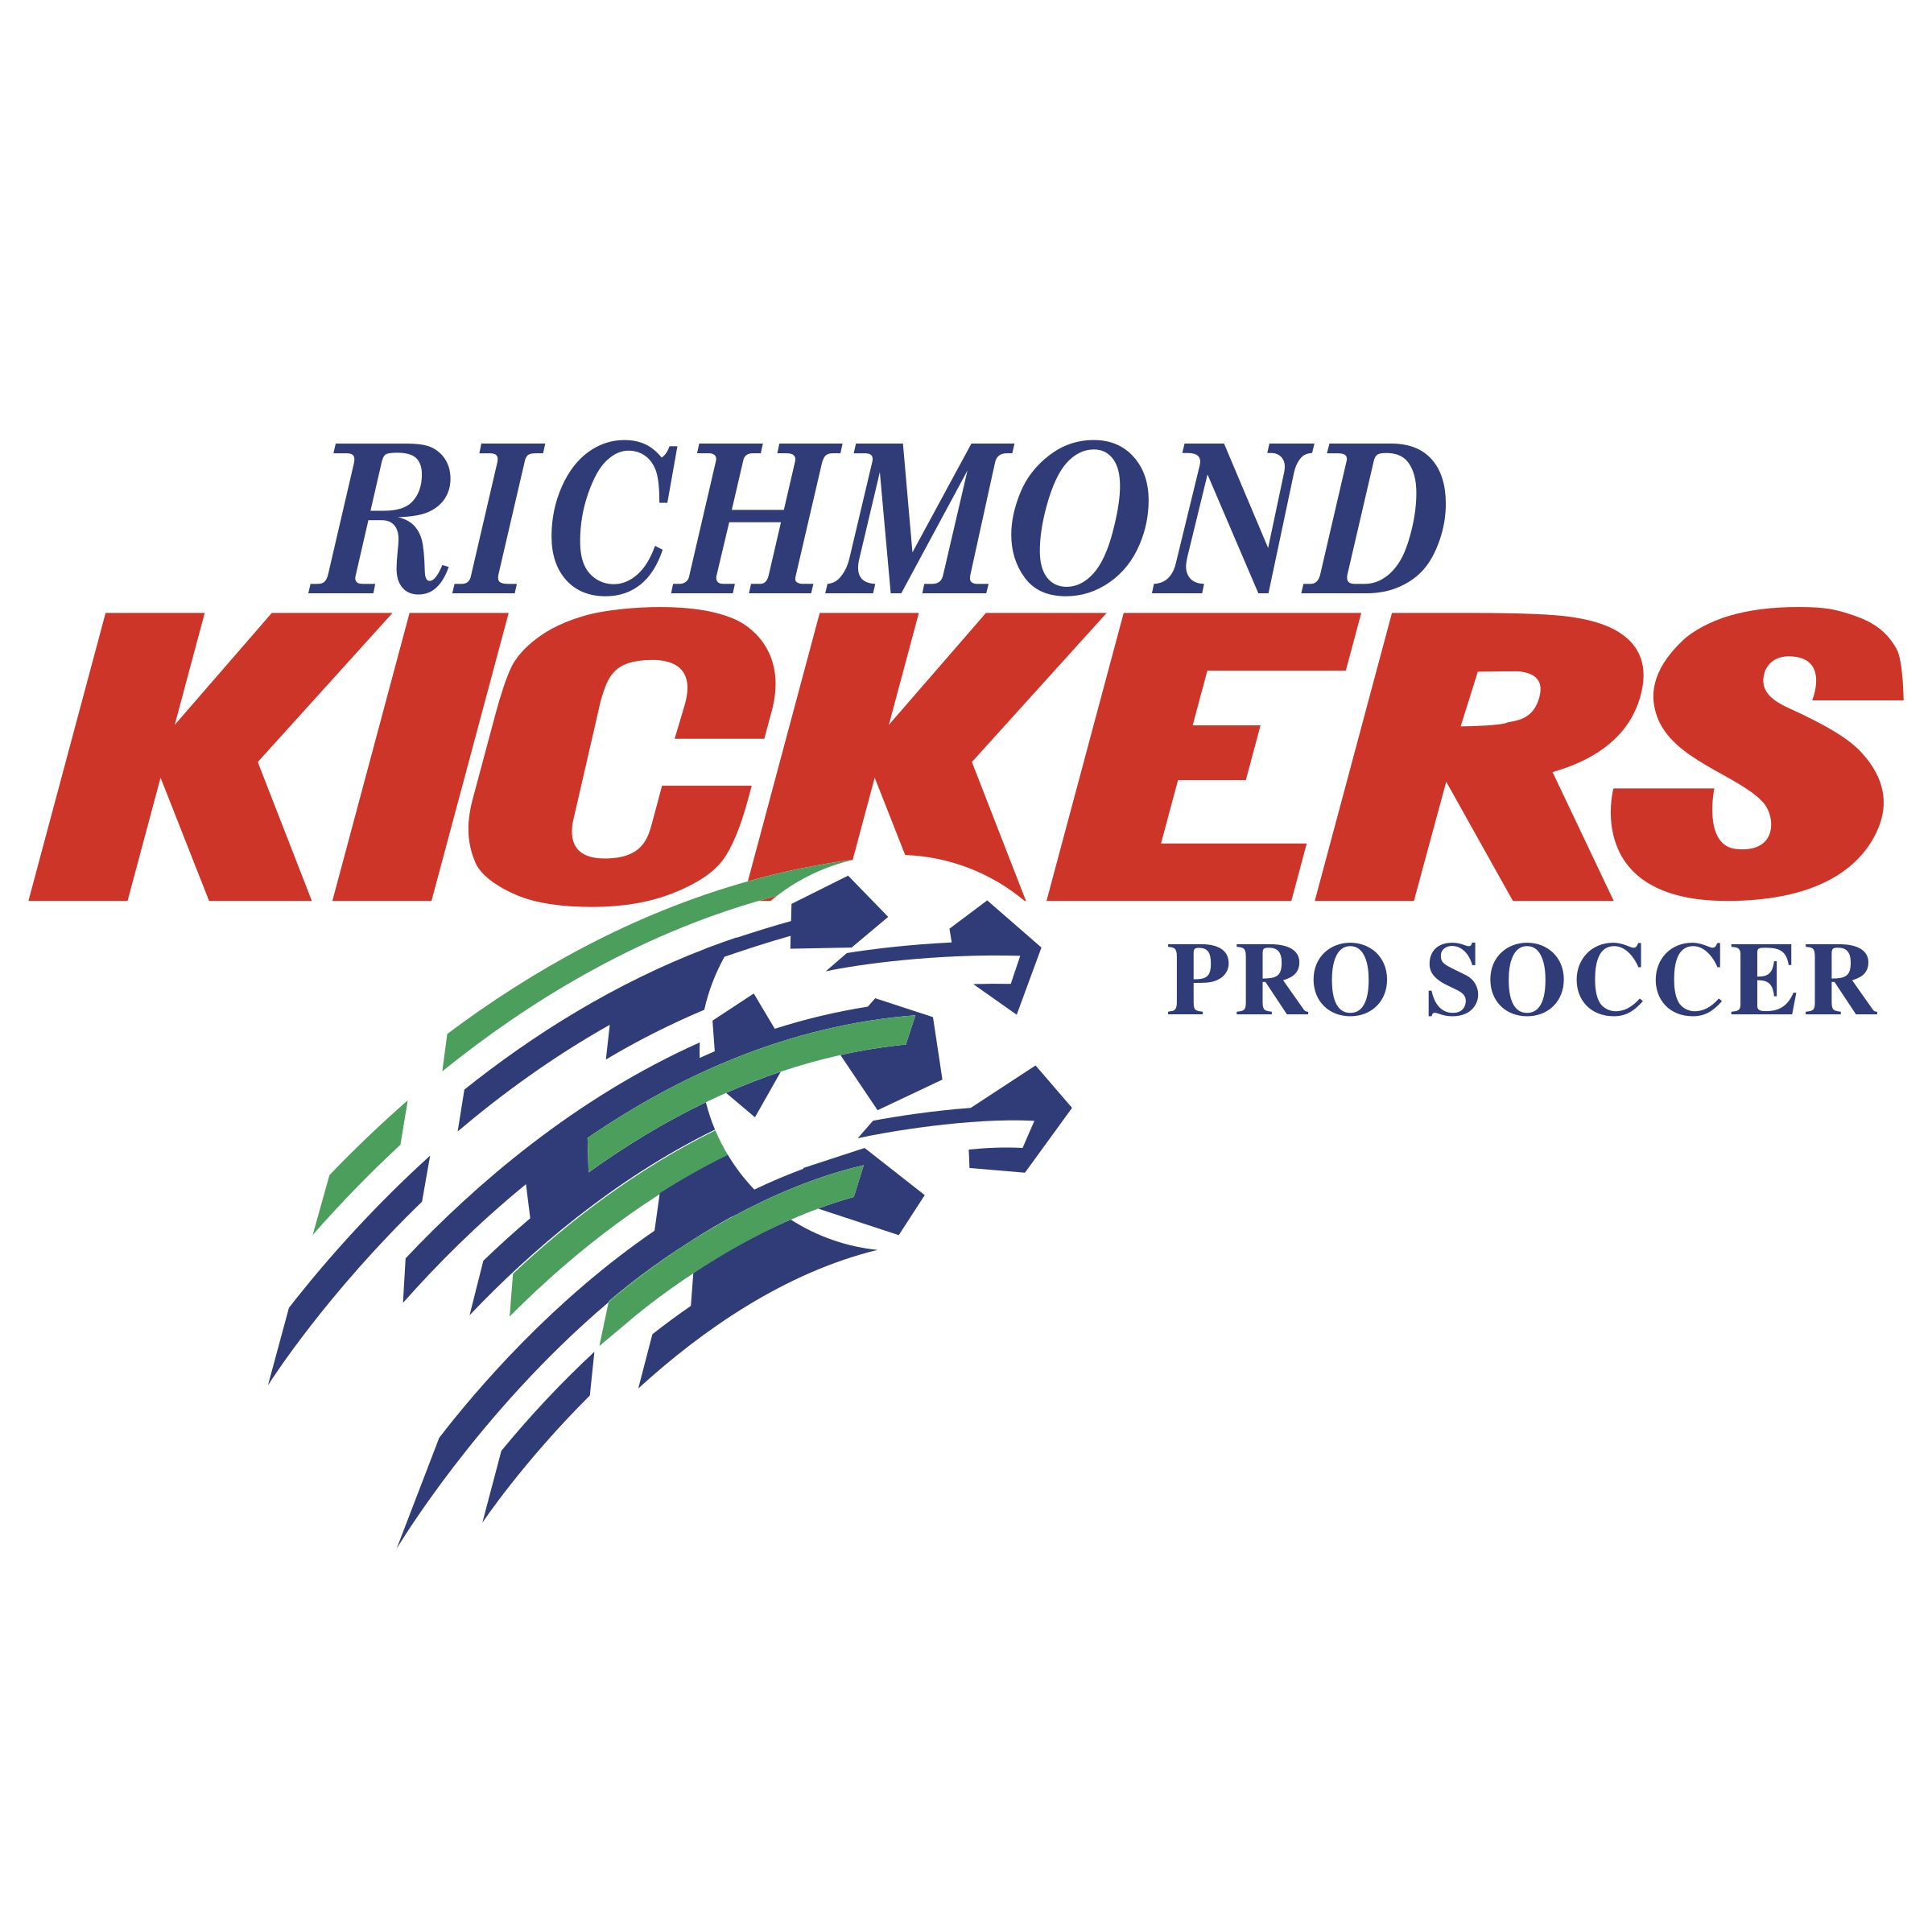 Kickers Logo - Richmond Kickers Logo PNG Transparent & SVG Vector - Freebie Supply